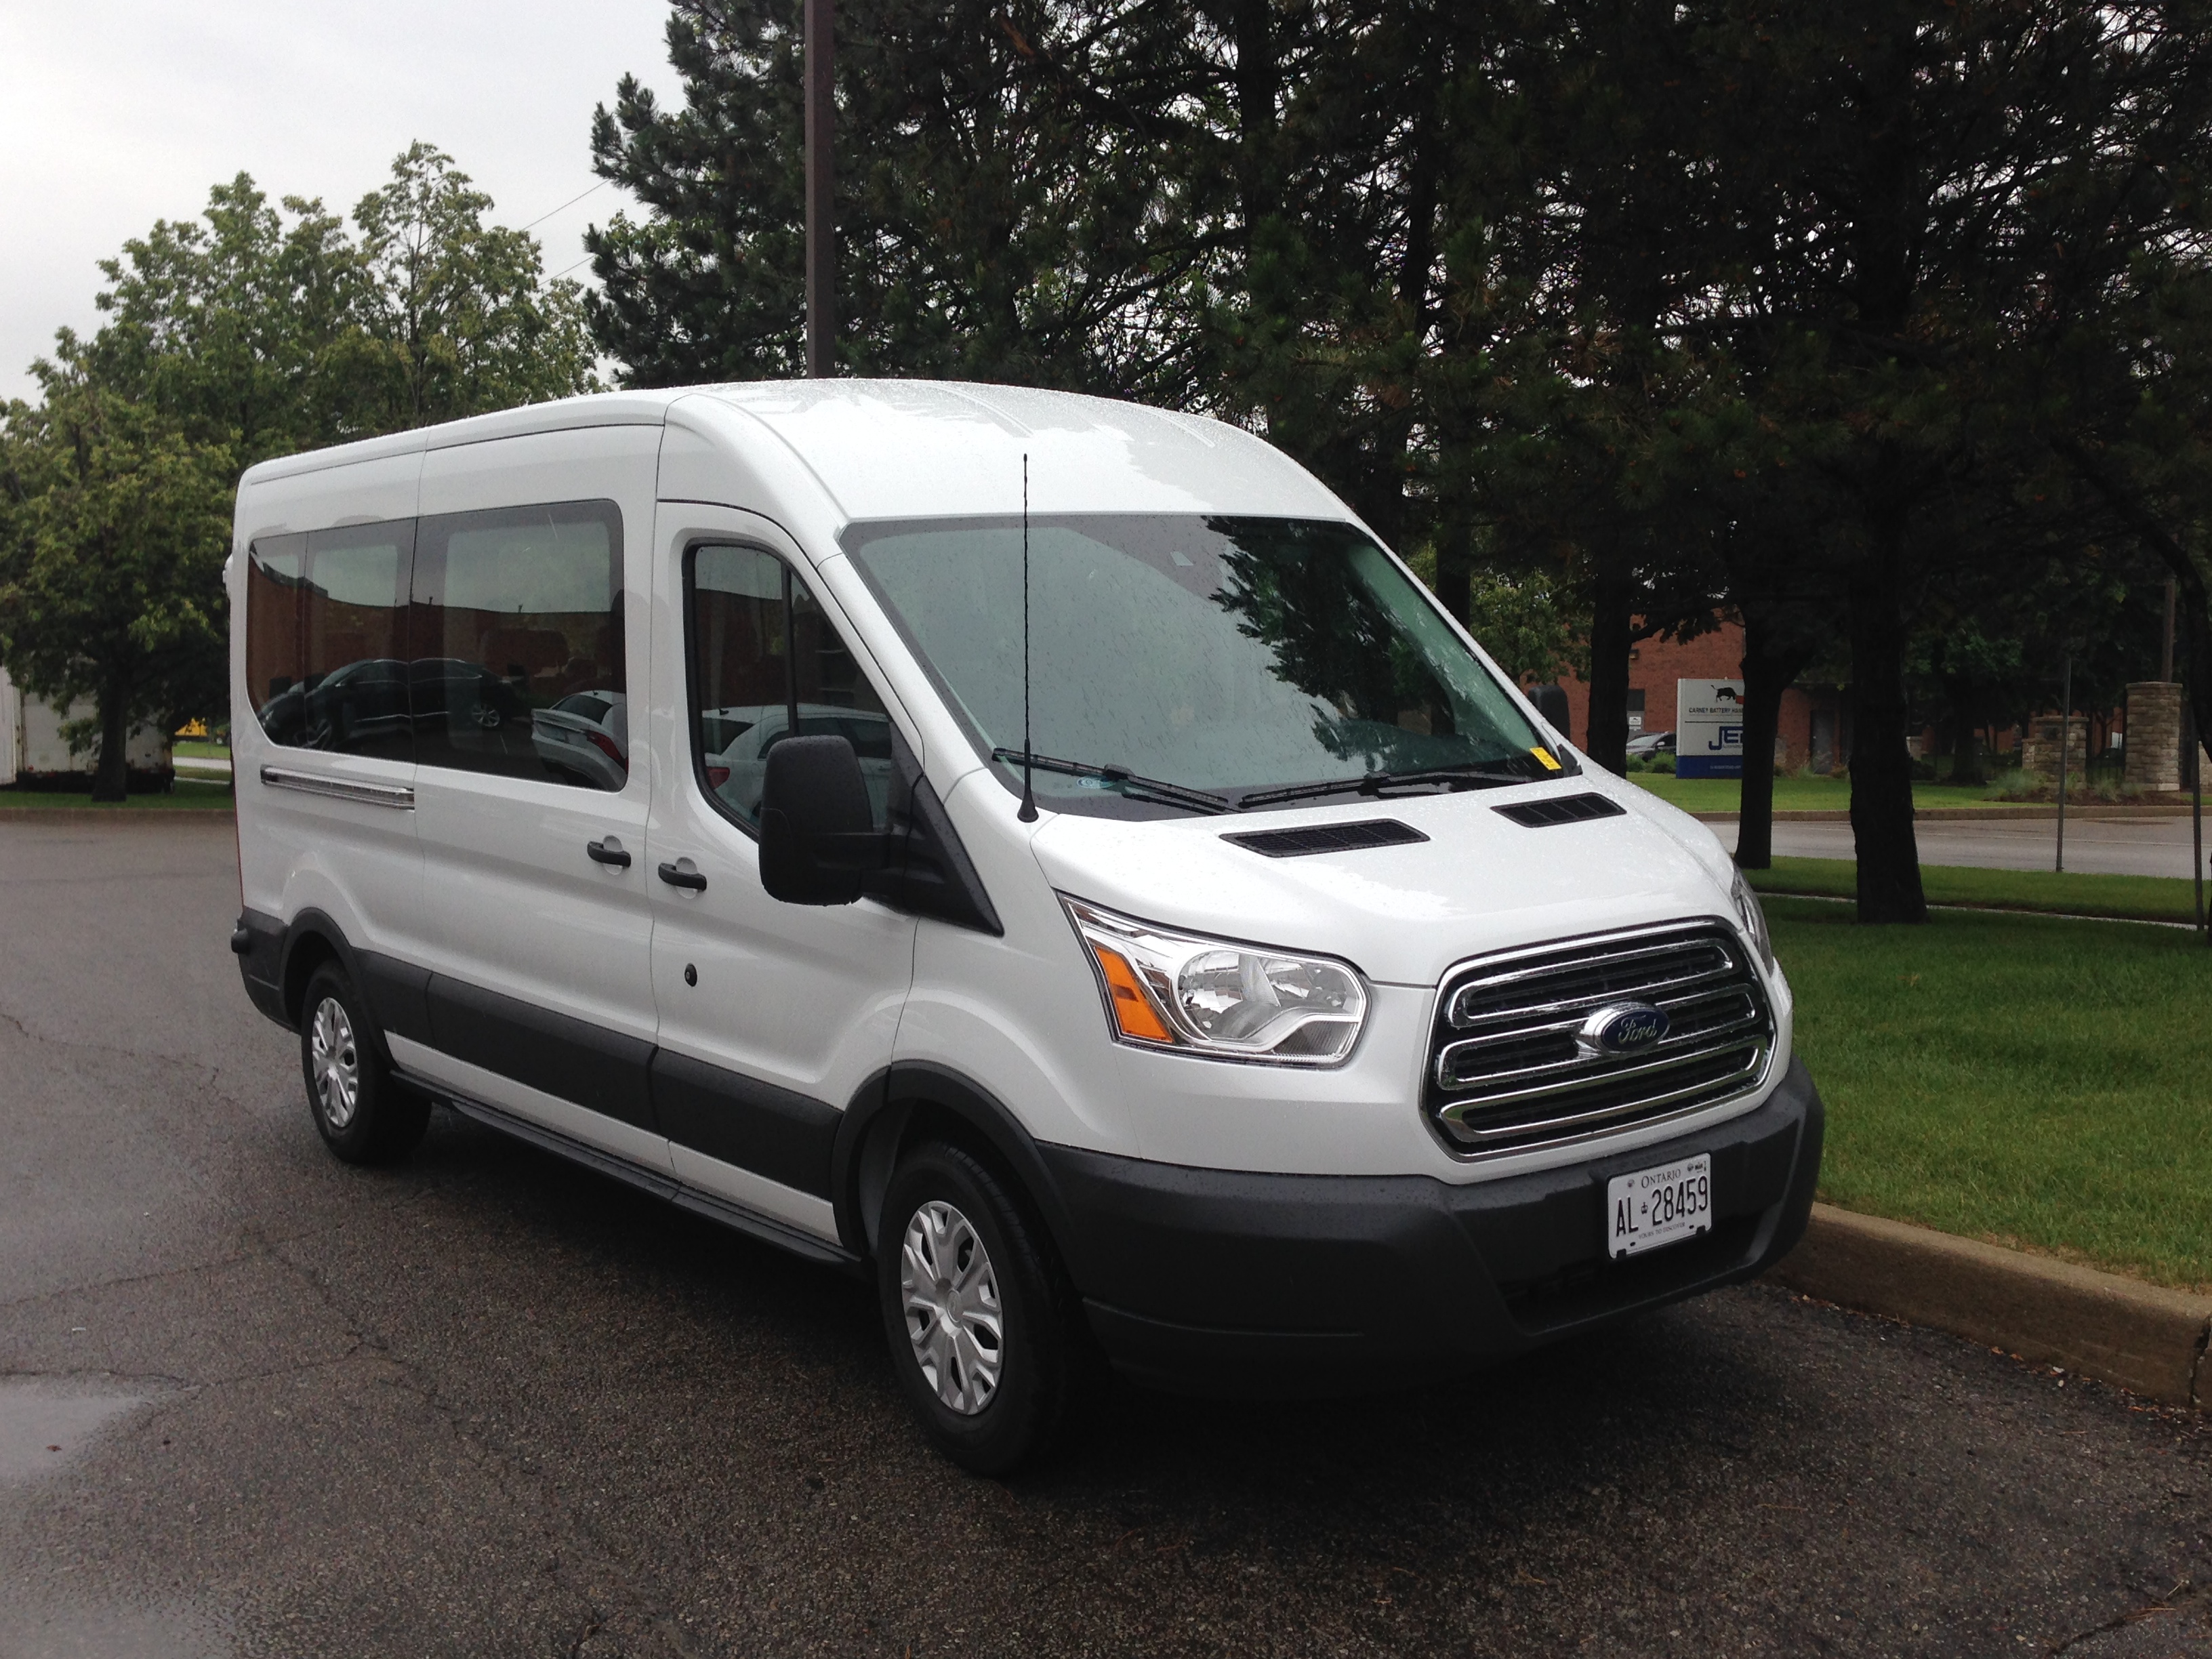 2017 Ford® Transit Passenger Van & Wagon | Photos, Videos ...